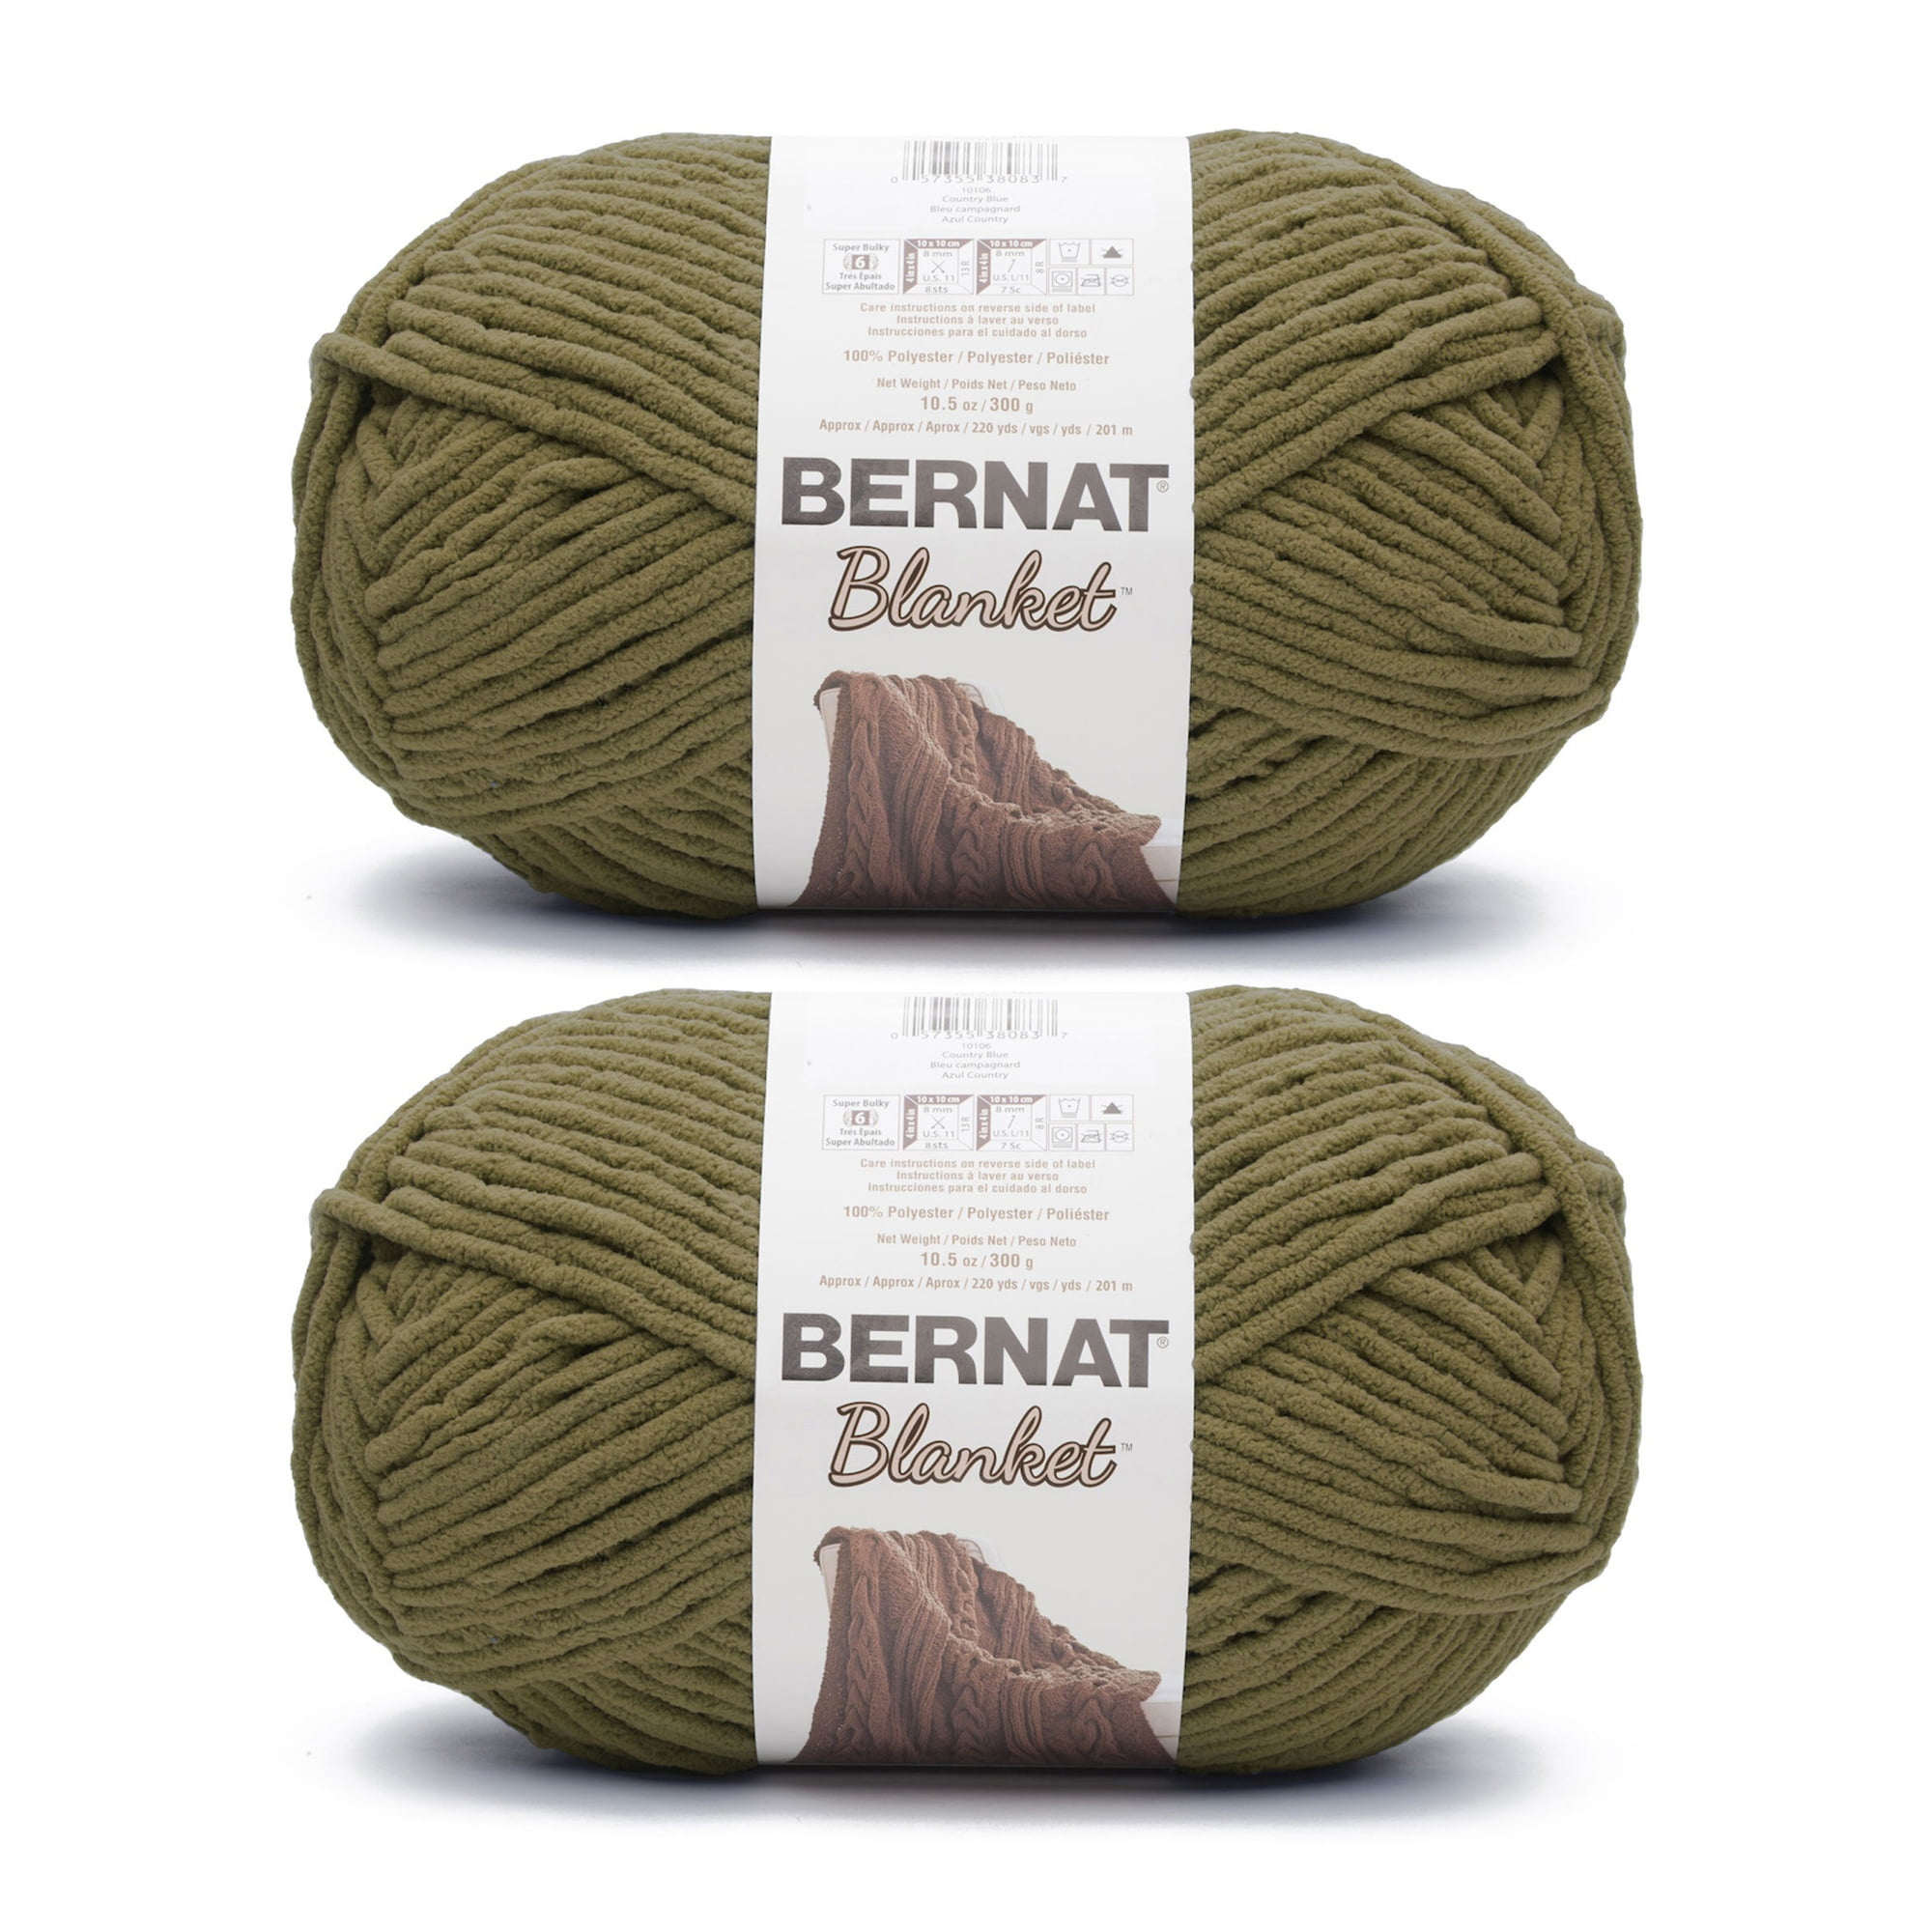 Verpetridure Wool Thread DIY Woven Yarn Hand Knitting Crocheted Blanket Crochet Yarn, Size: As Show, Brown